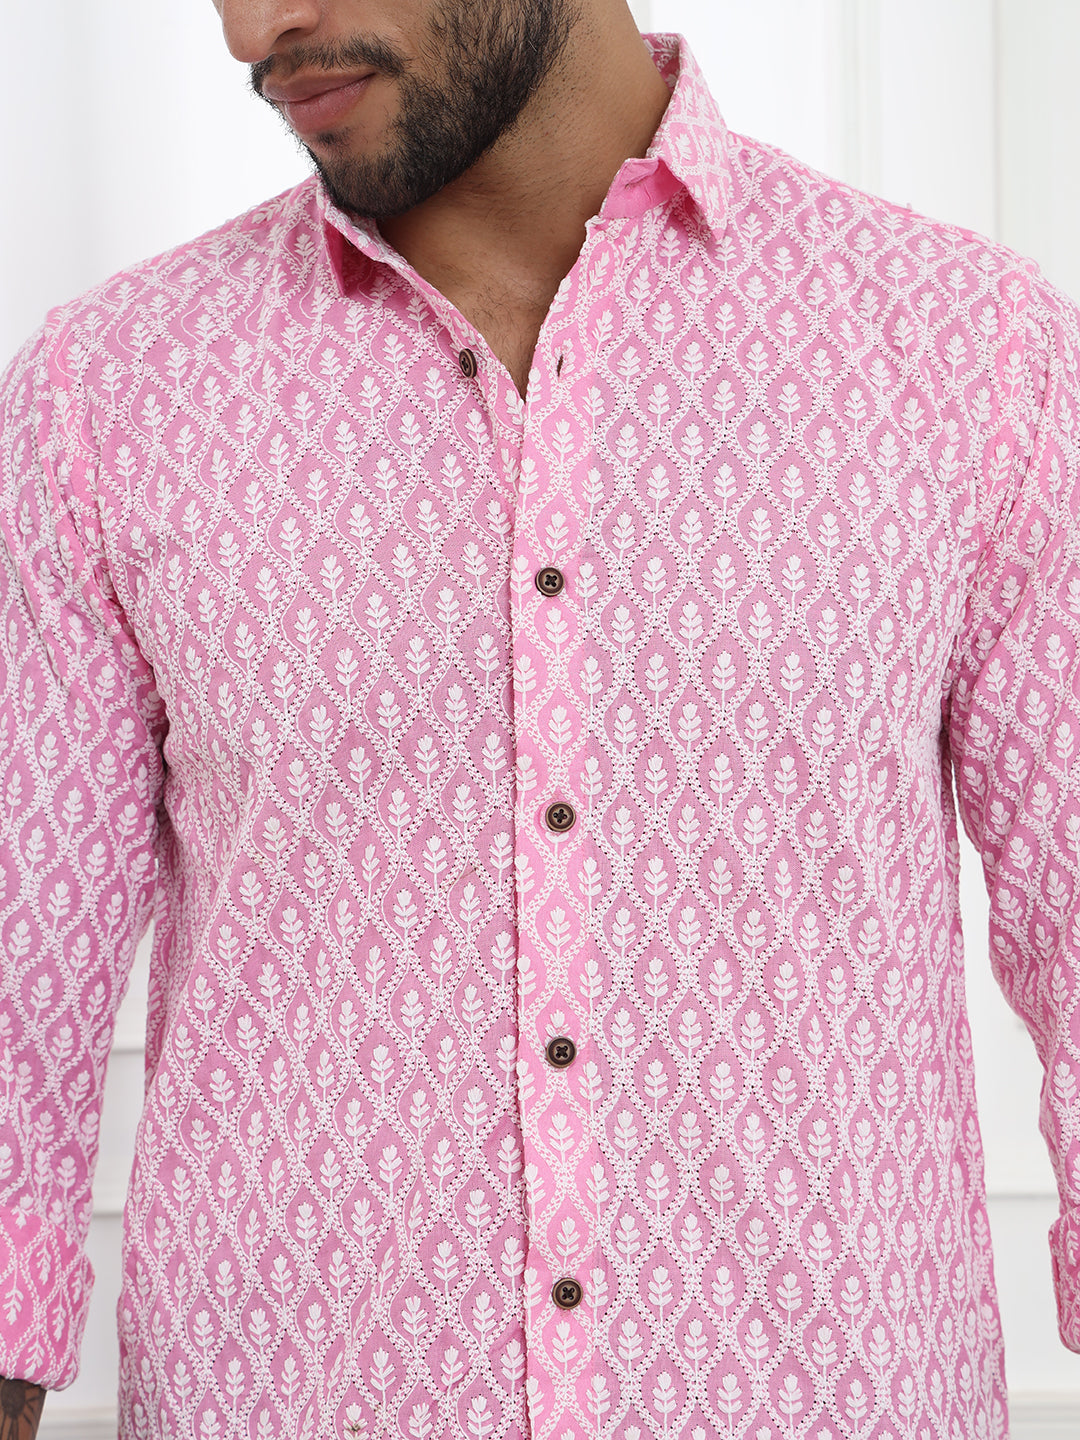 Firangi Yarn Super Soft Full Sleeves Chikankari schiffli Embroided Men's Shirt Pink